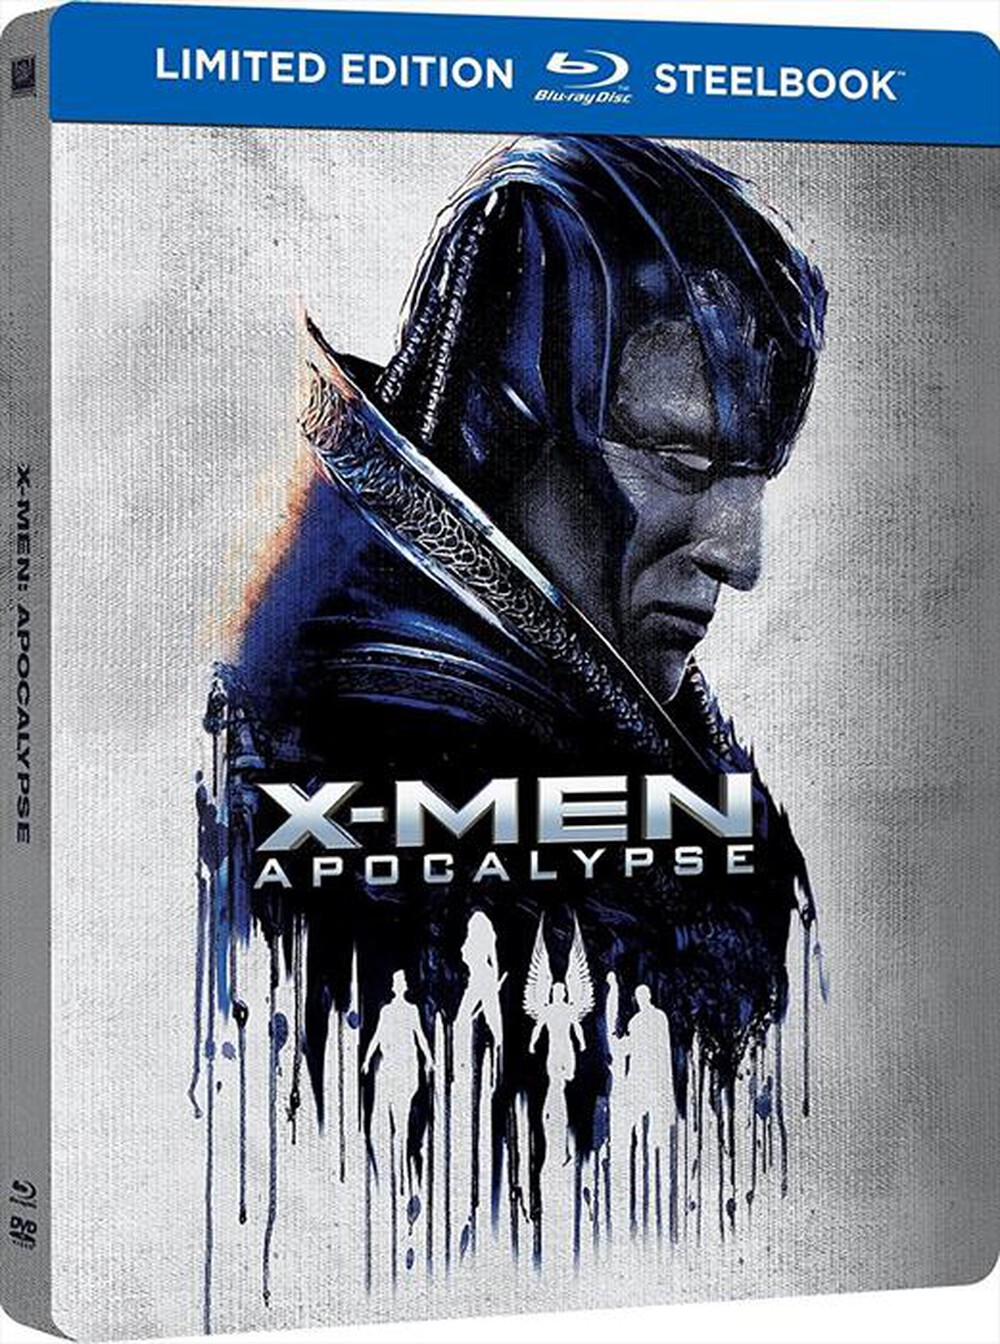 "WALT DISNEY - X-Men - Apocalisse (Ltd Steelbook)"